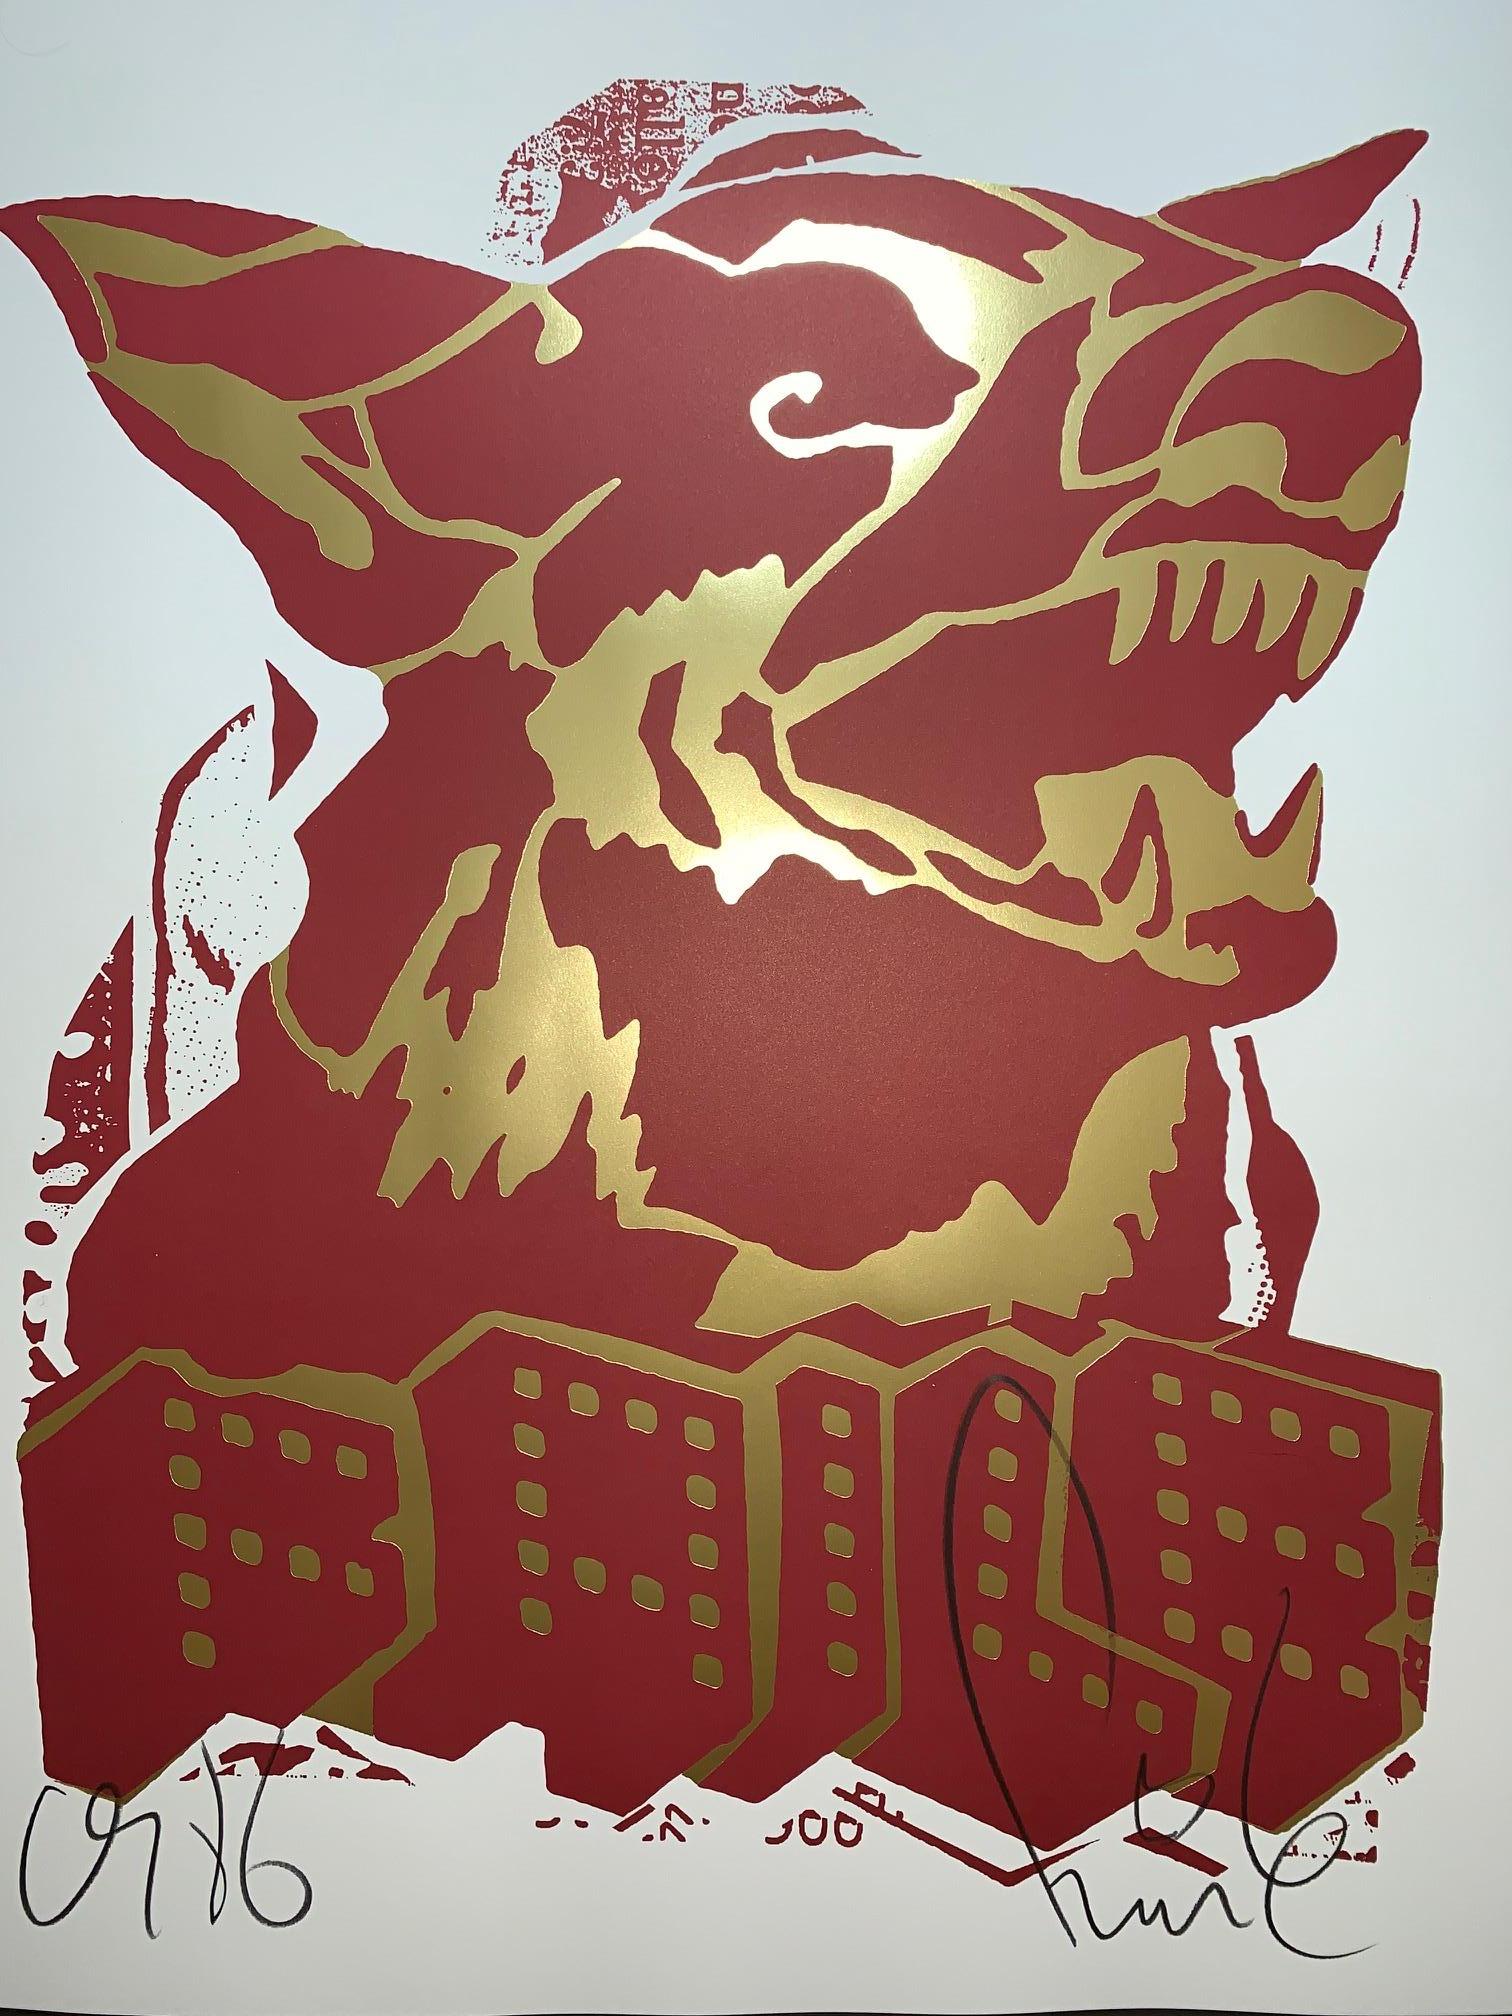 Faile Animal Print - FAILE "RED DOG" Golden Edition Screen Print 2018 Street Contemporary Art Classic